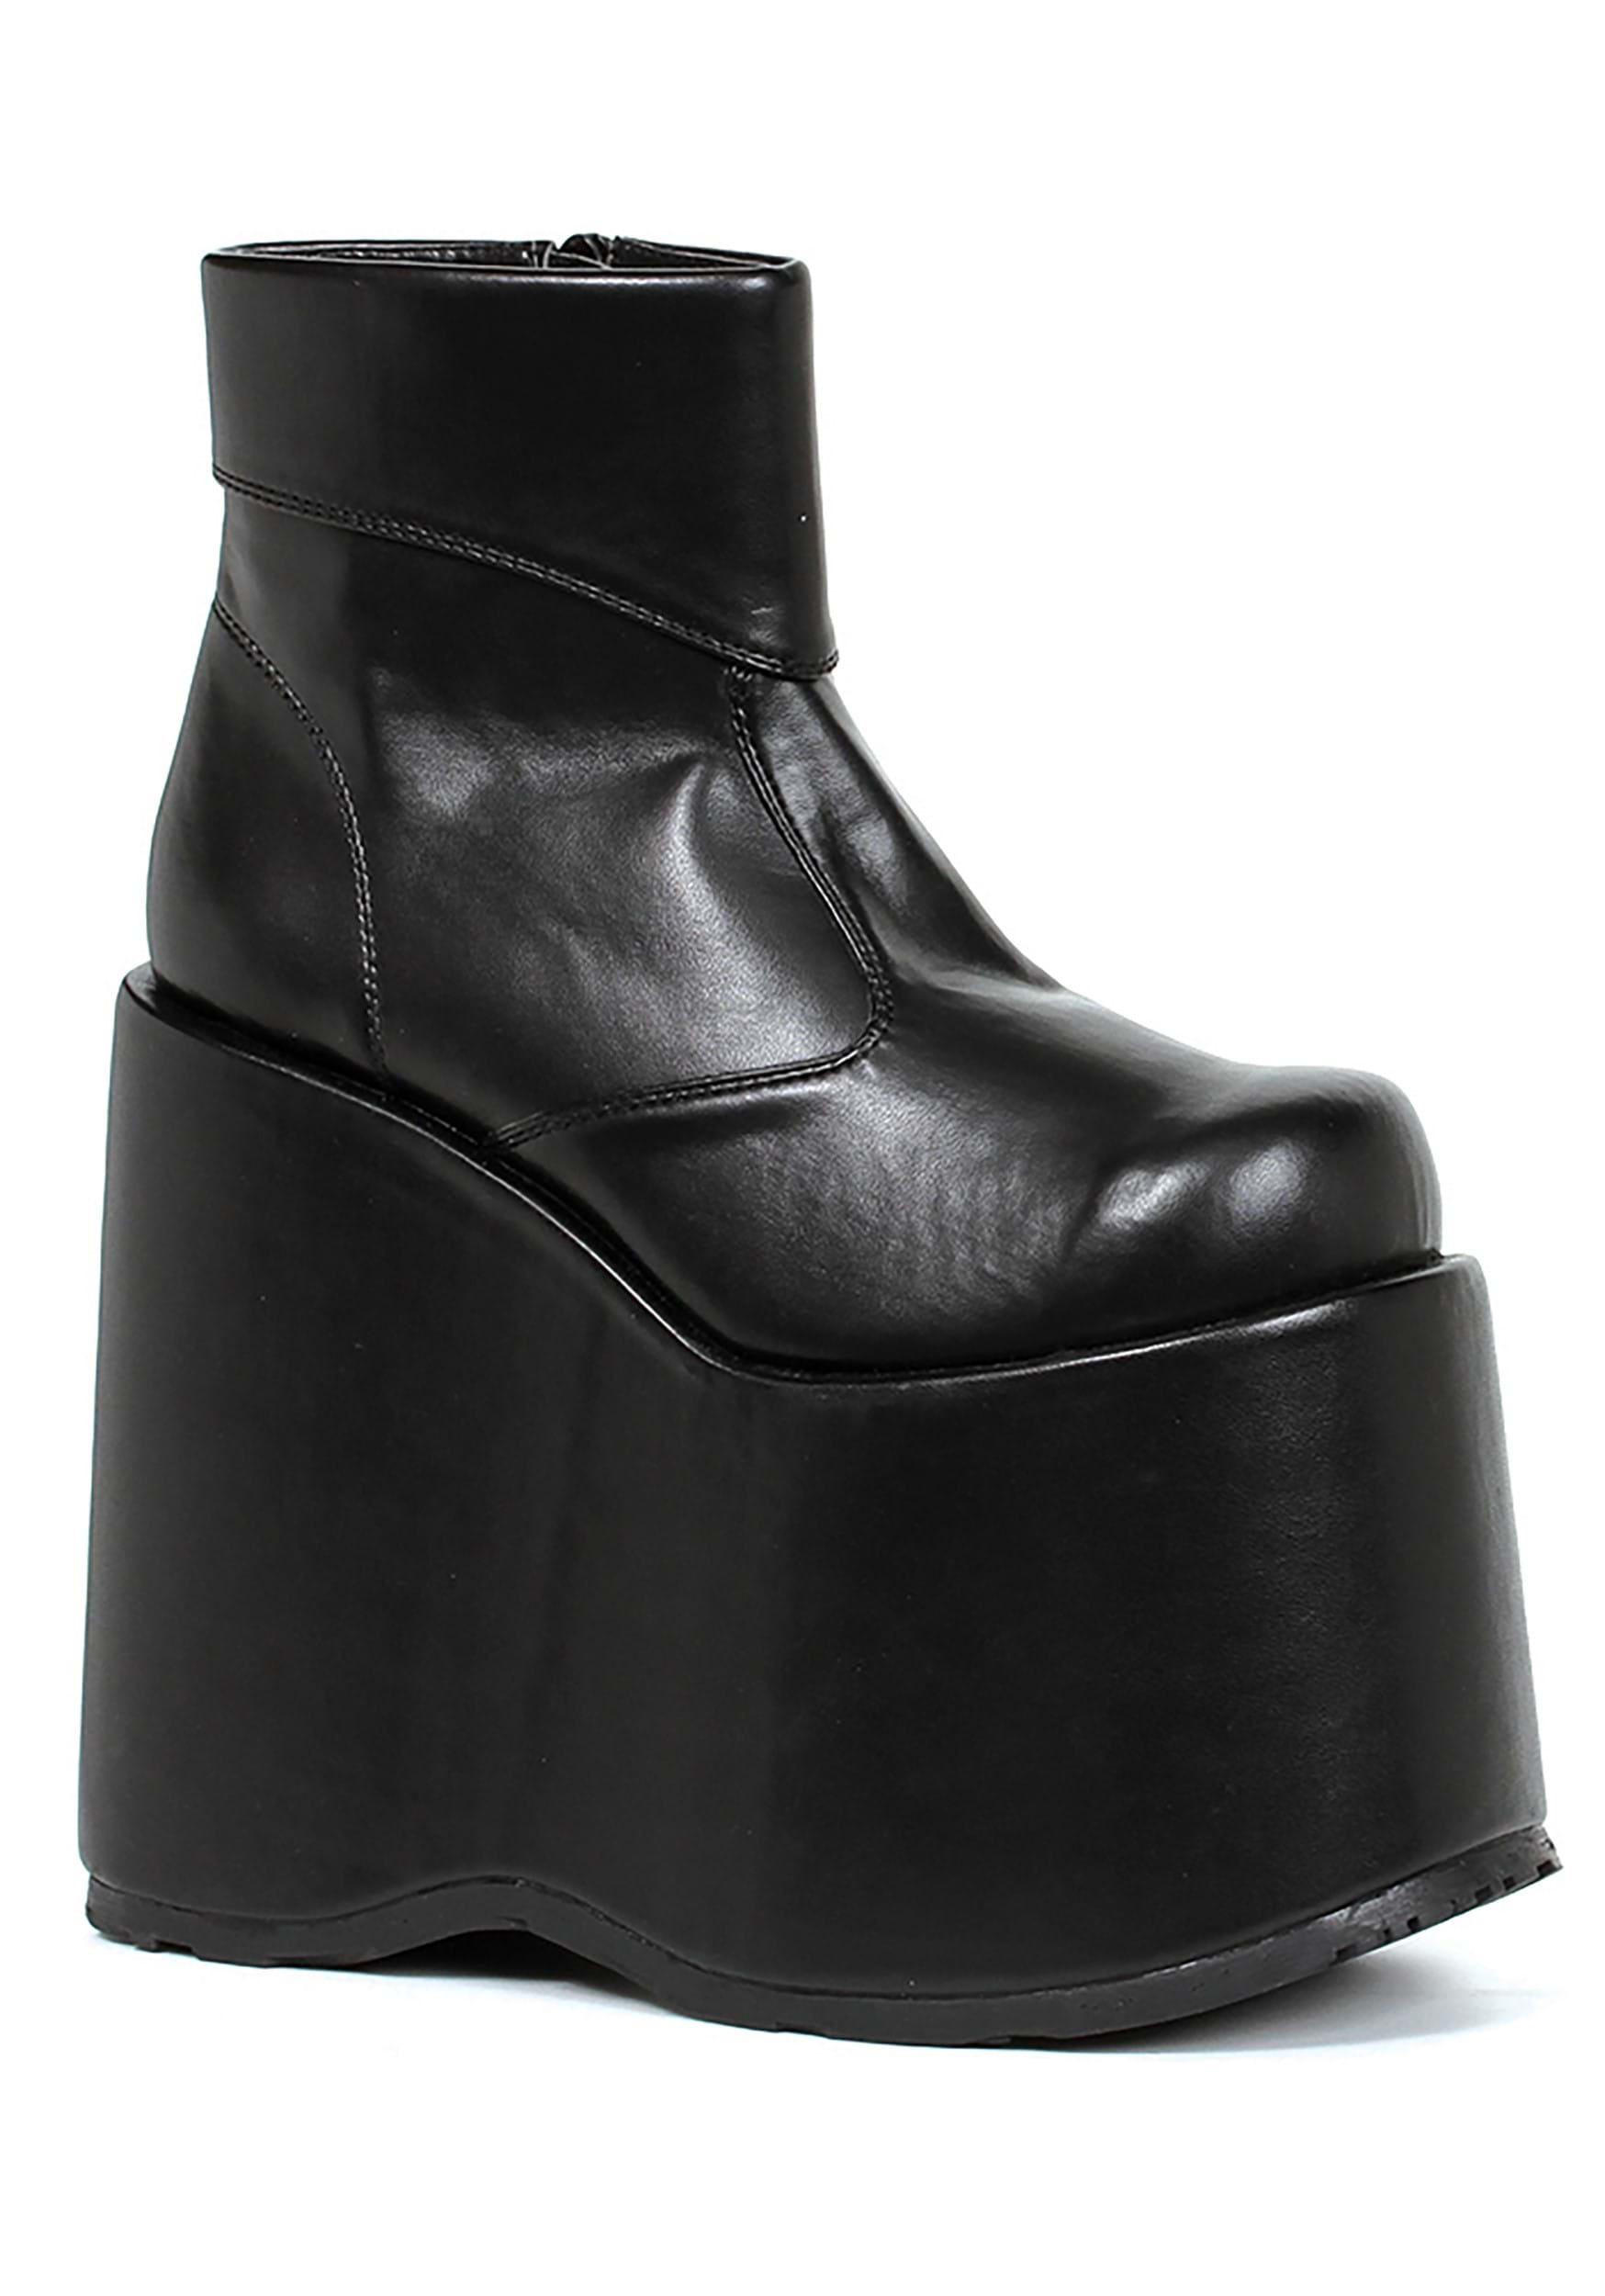 https://images.halloweencostumes.ca/products/81783/1-1/mens-black-monster-platform-shoes.jpg